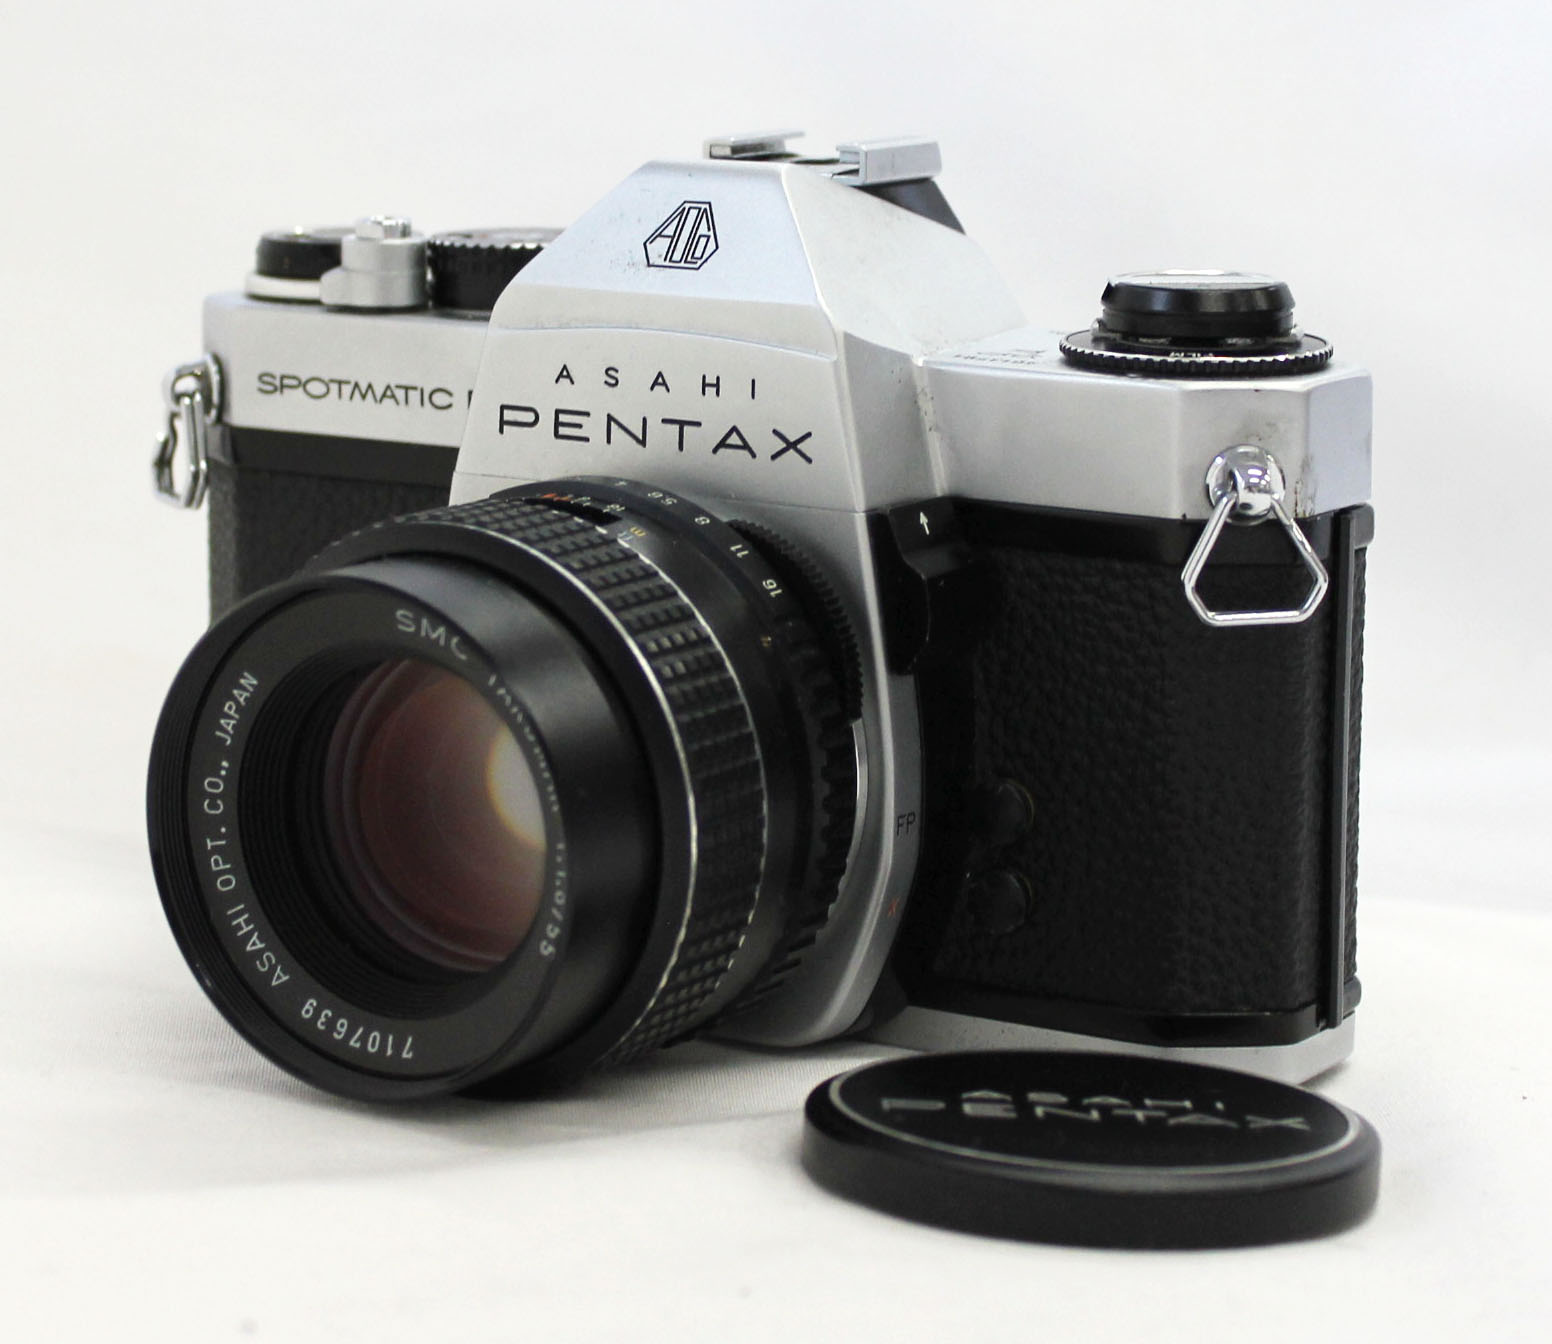 Japan Used Camera Shop | [Exc++++] Asahi Pentax Spotmatic F SPF SLR Camera w/ SMC Takumar 55mm F/1.8 Lens from Japan